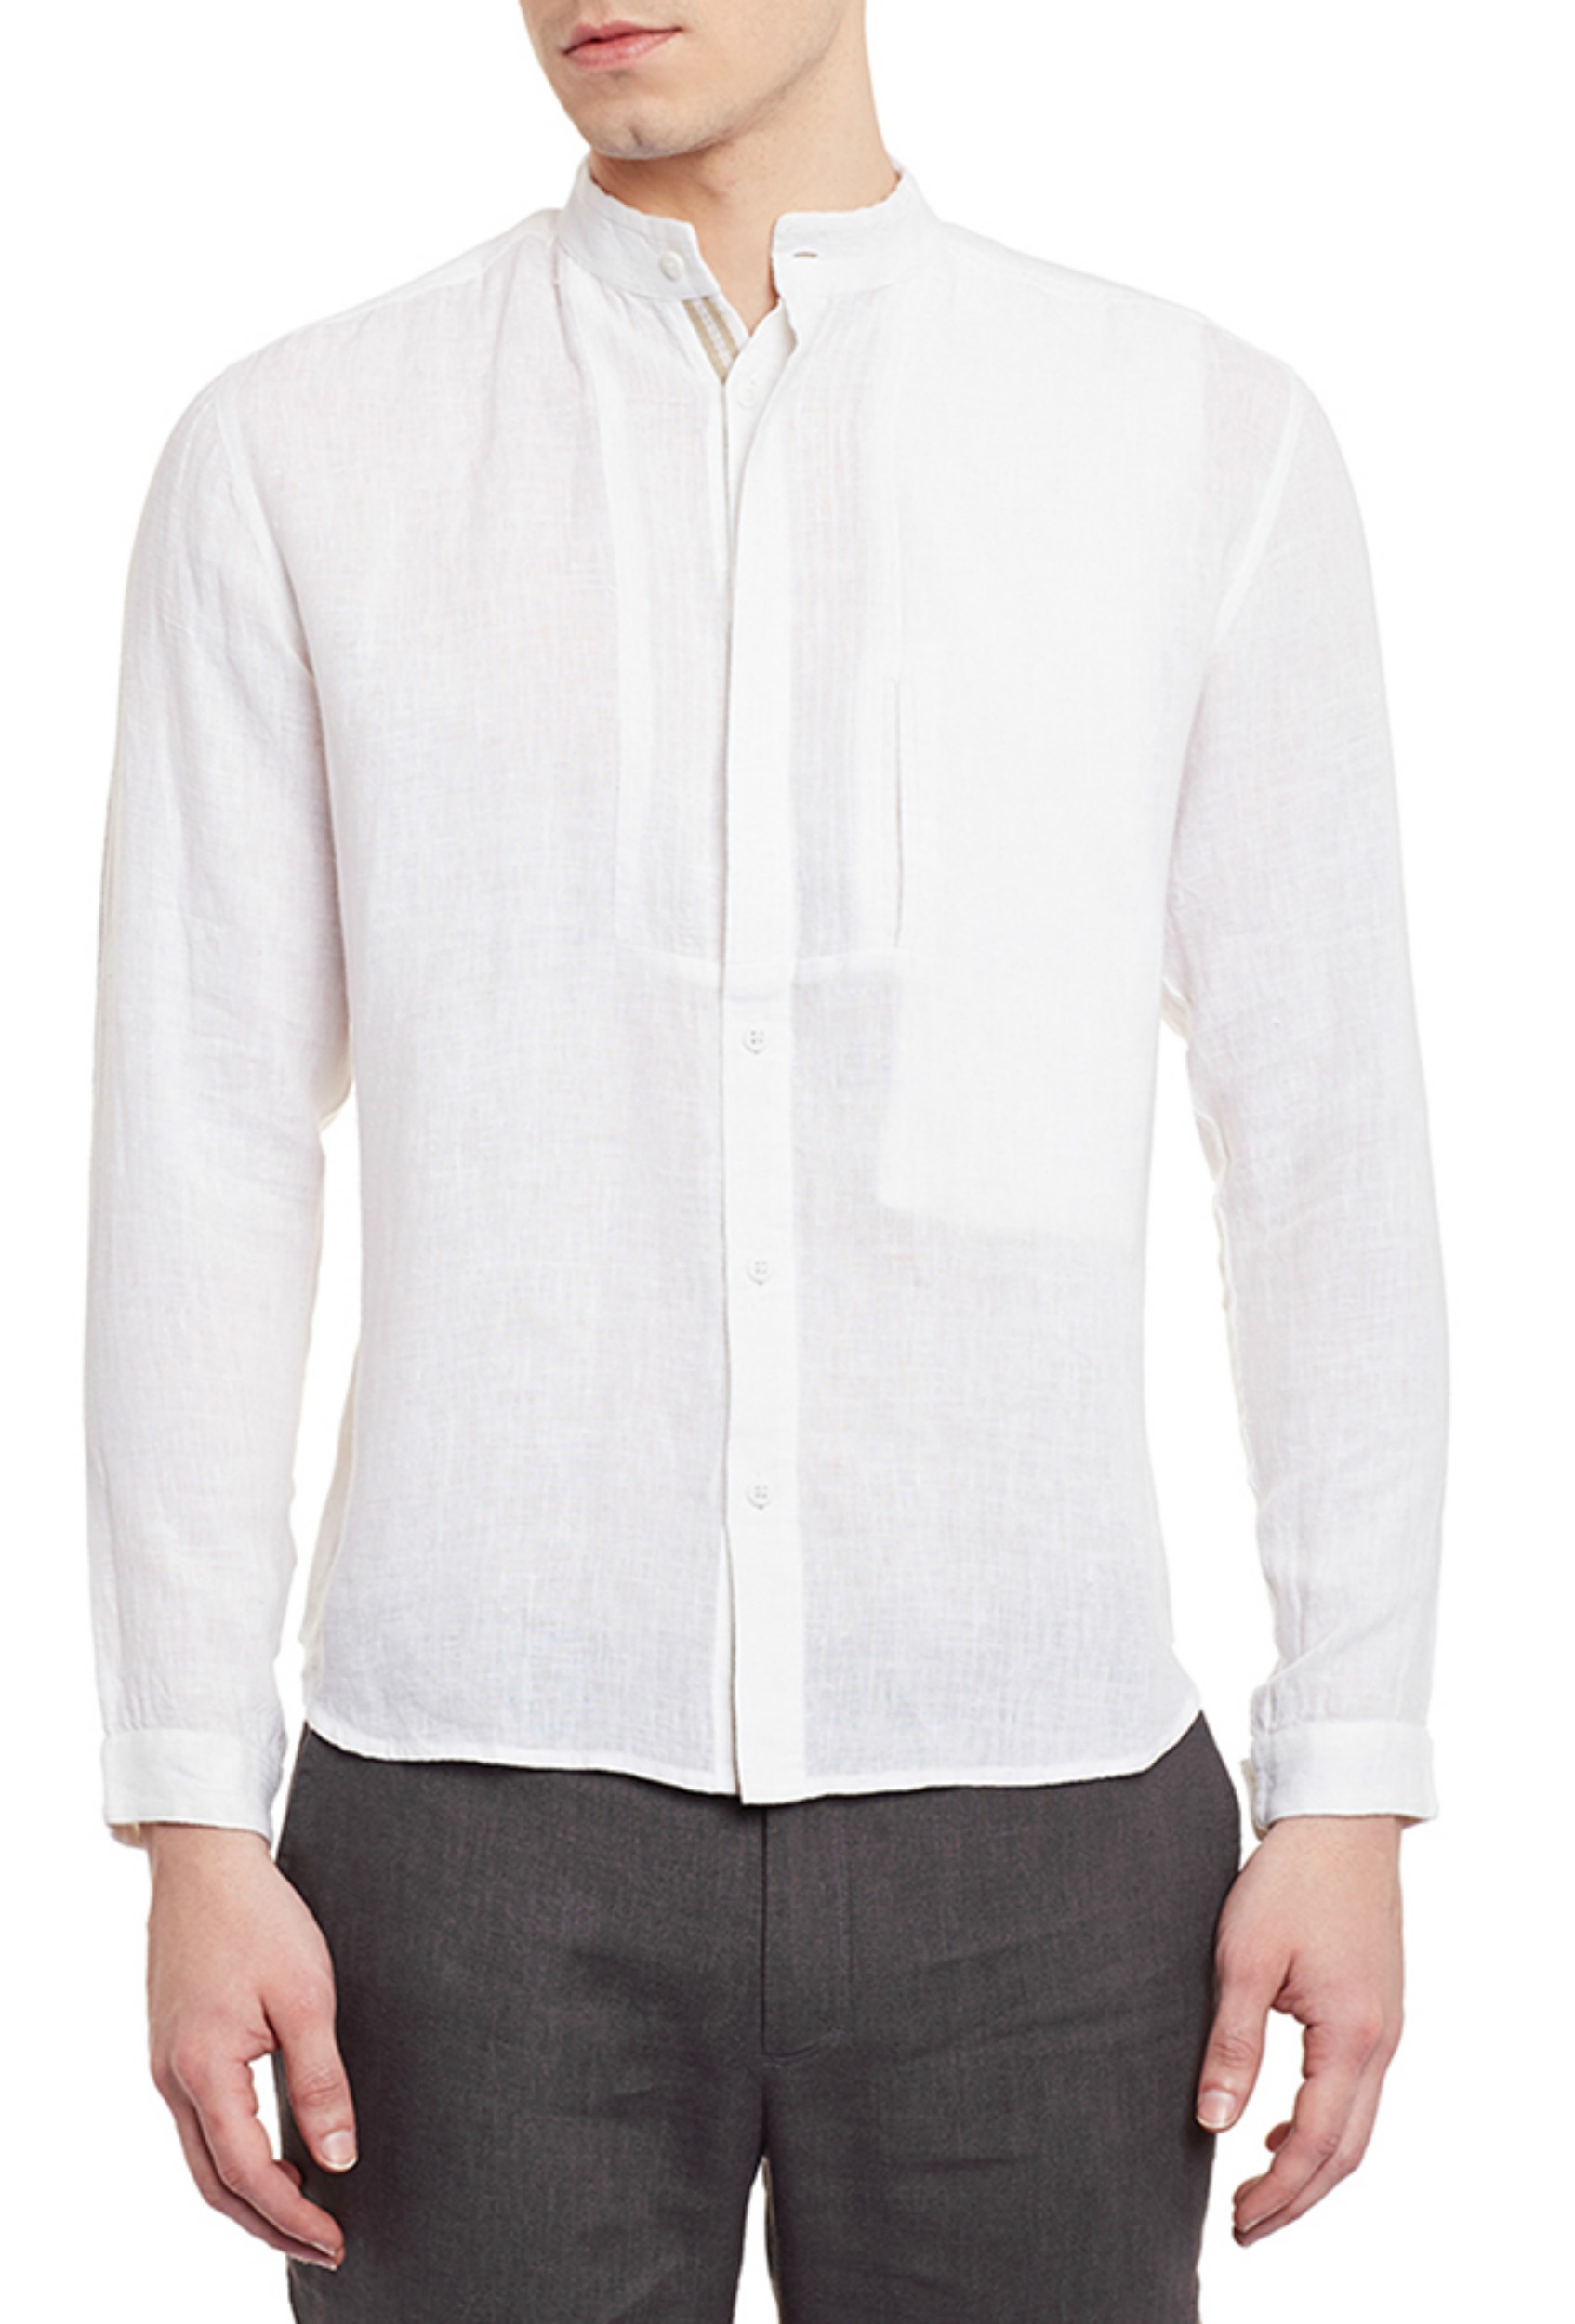 White linen safe pocket shirt by Dhatu Design Studio | The Secret Label